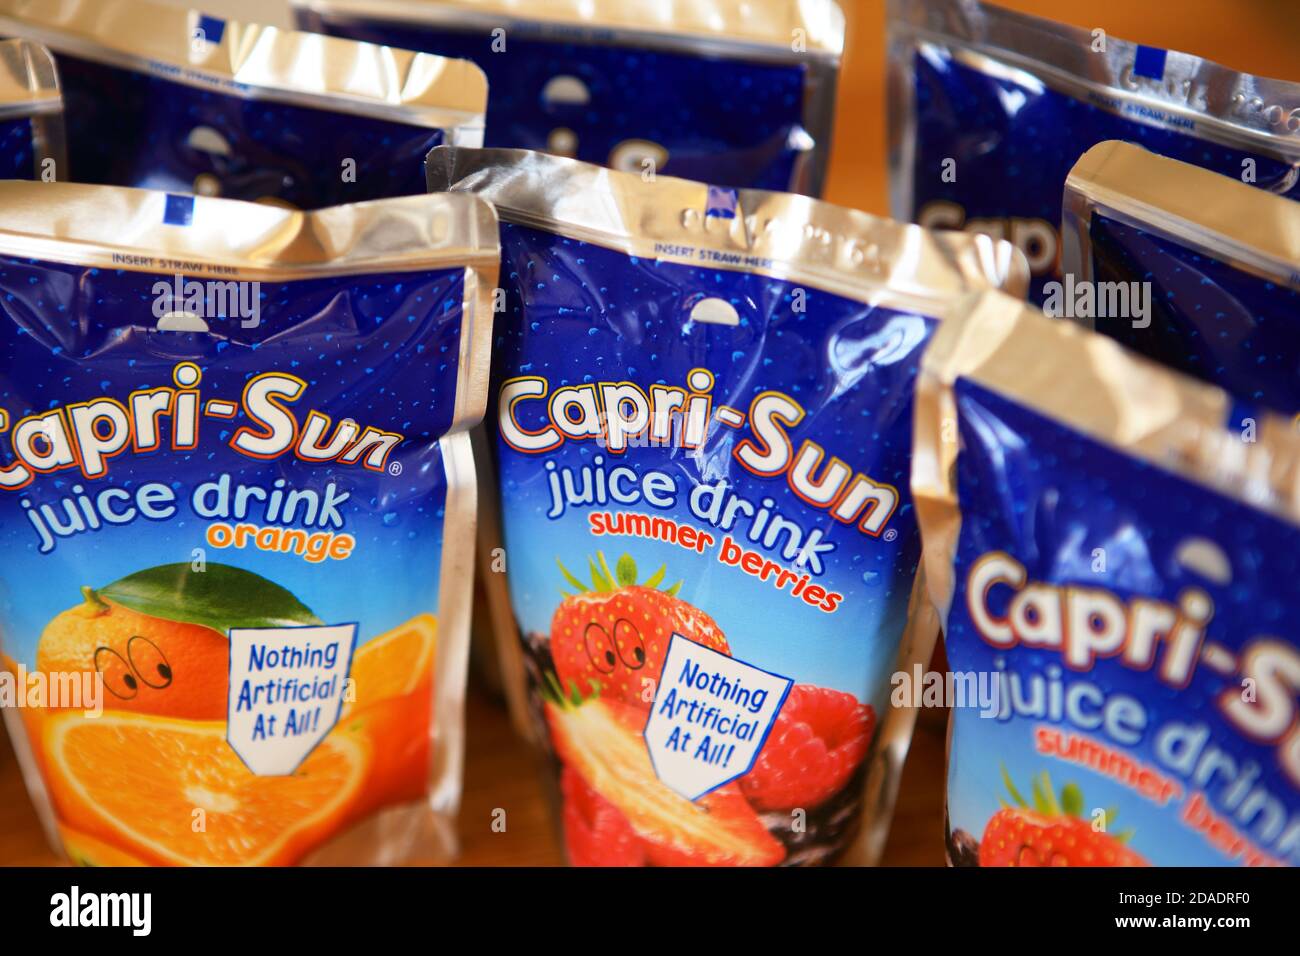 Bolsas de jugo de naranja y bayas de verano Capri-Sun Foto de stock